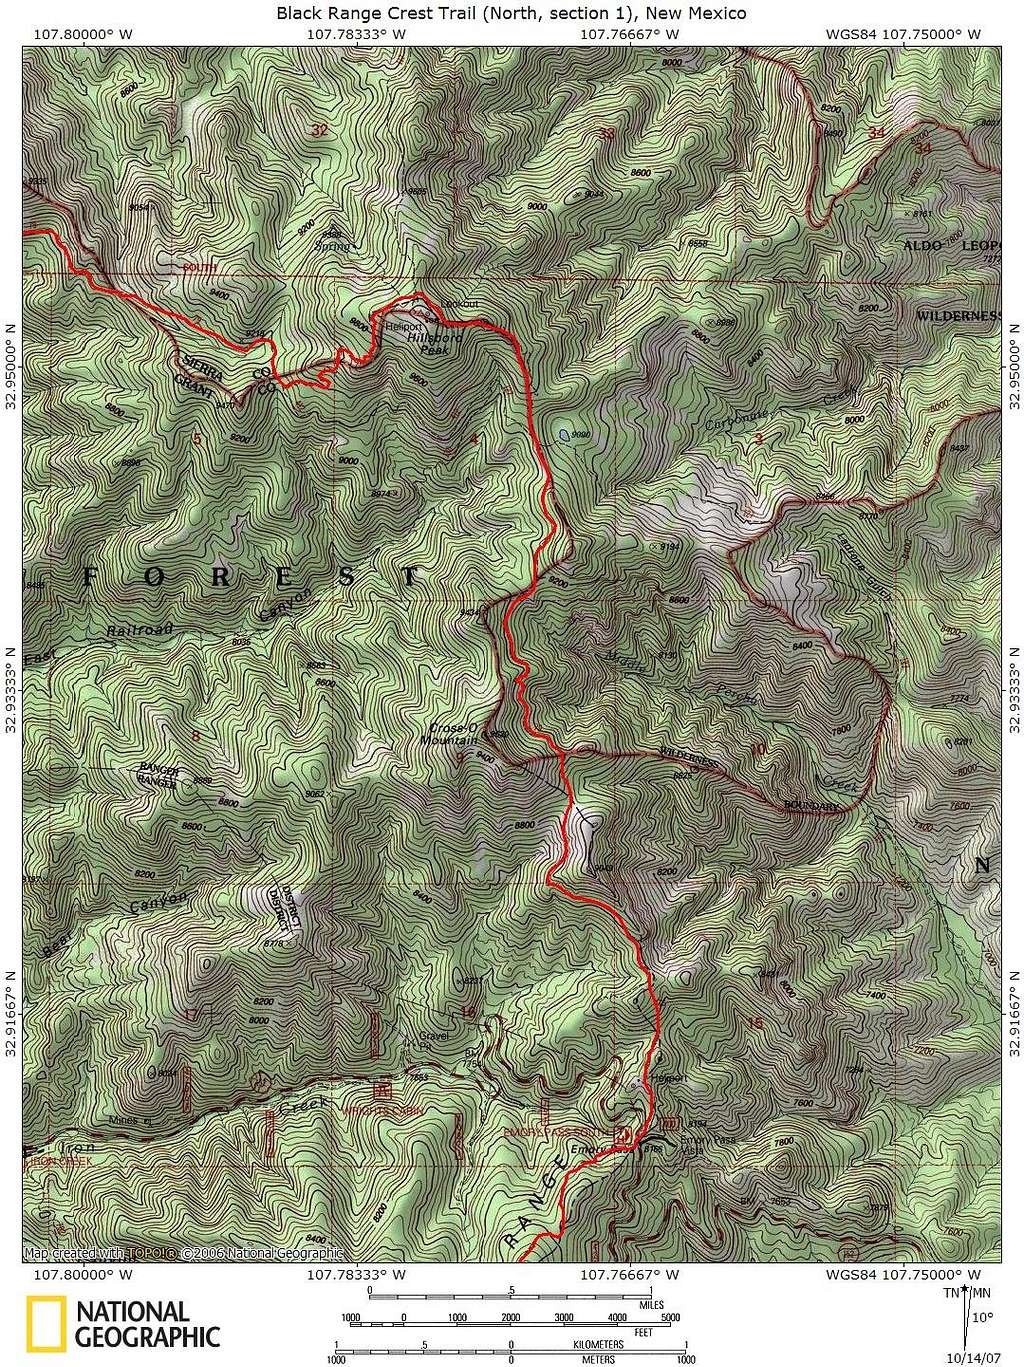 Black Range Crest Trail (North, section 1)